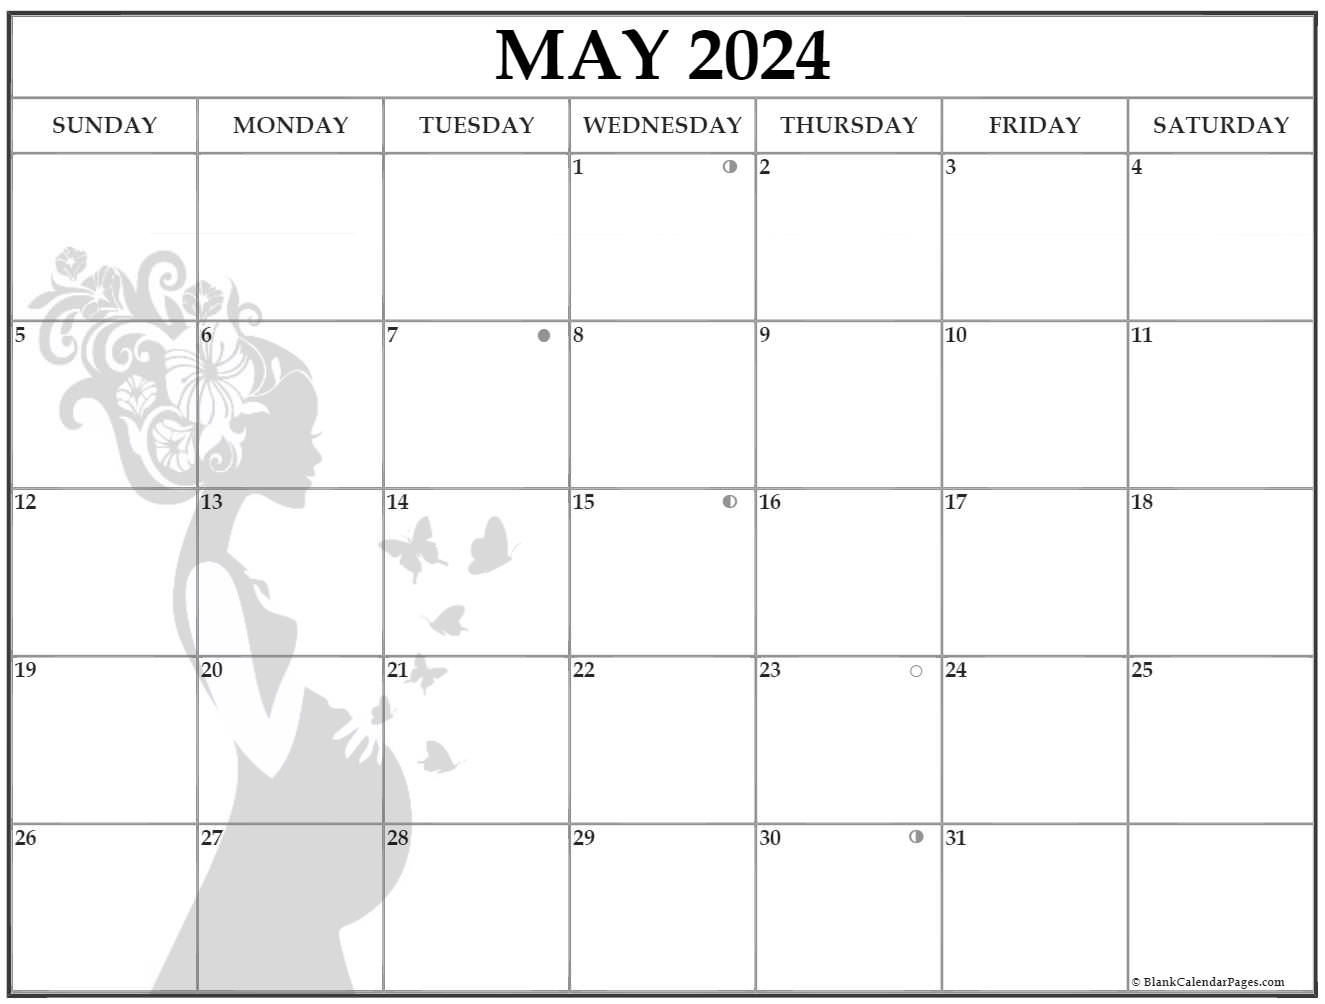 May 2021 Pregnancy Calendar | Fertility Calendar